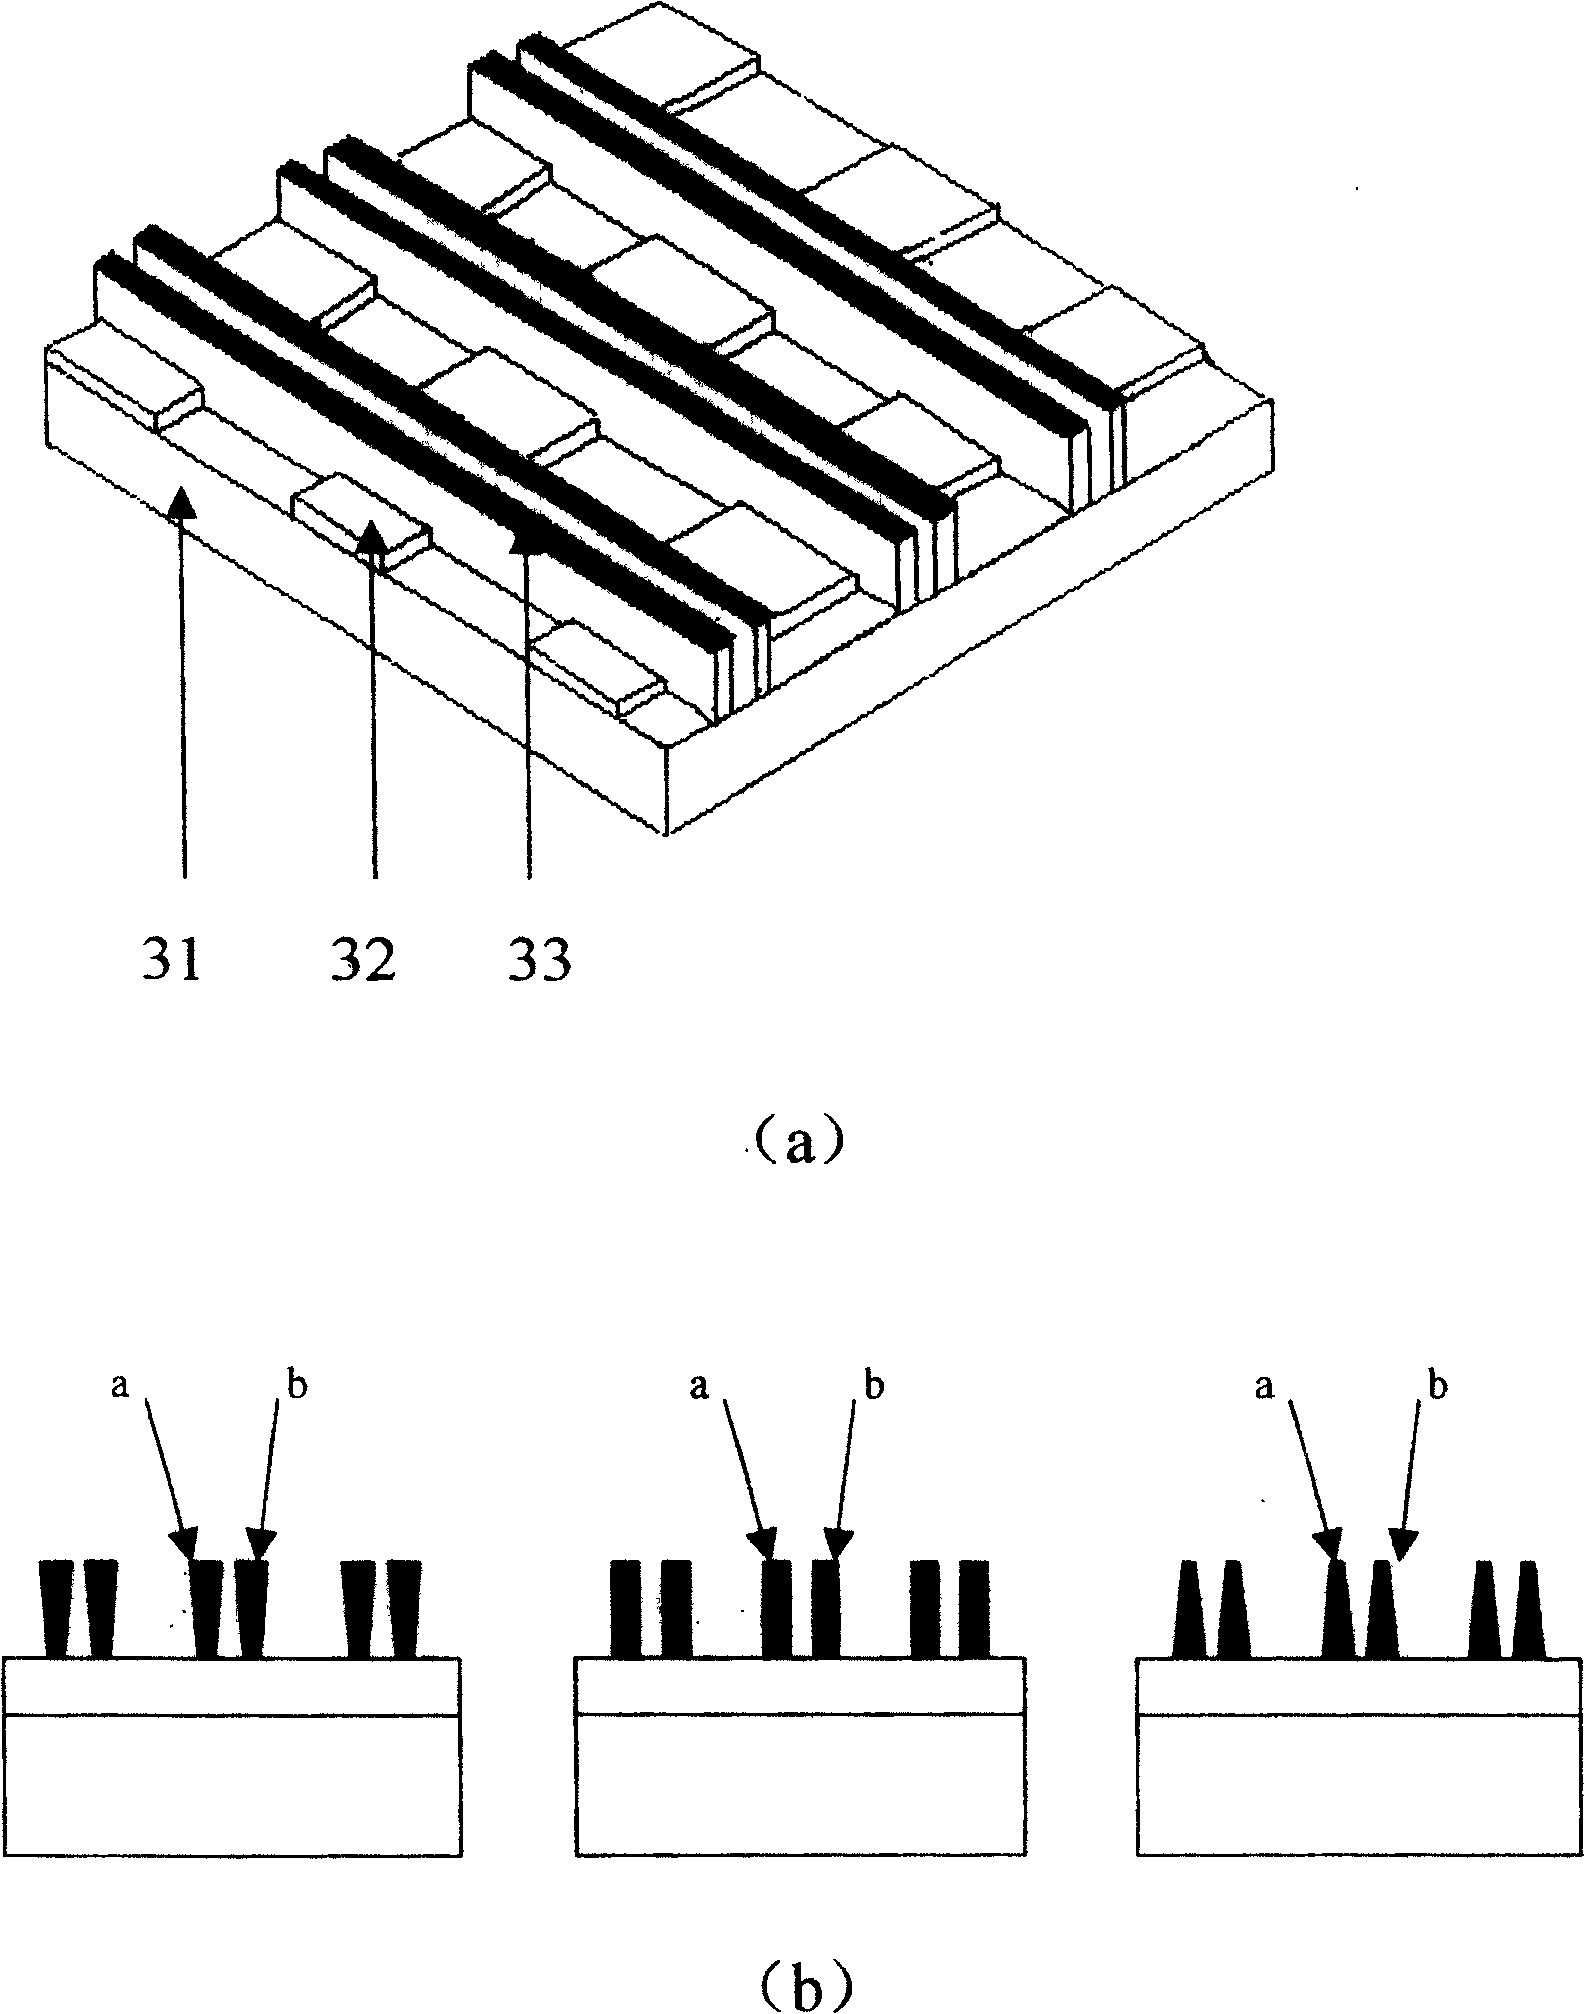 Production of isolating column of organic electroluminescent device